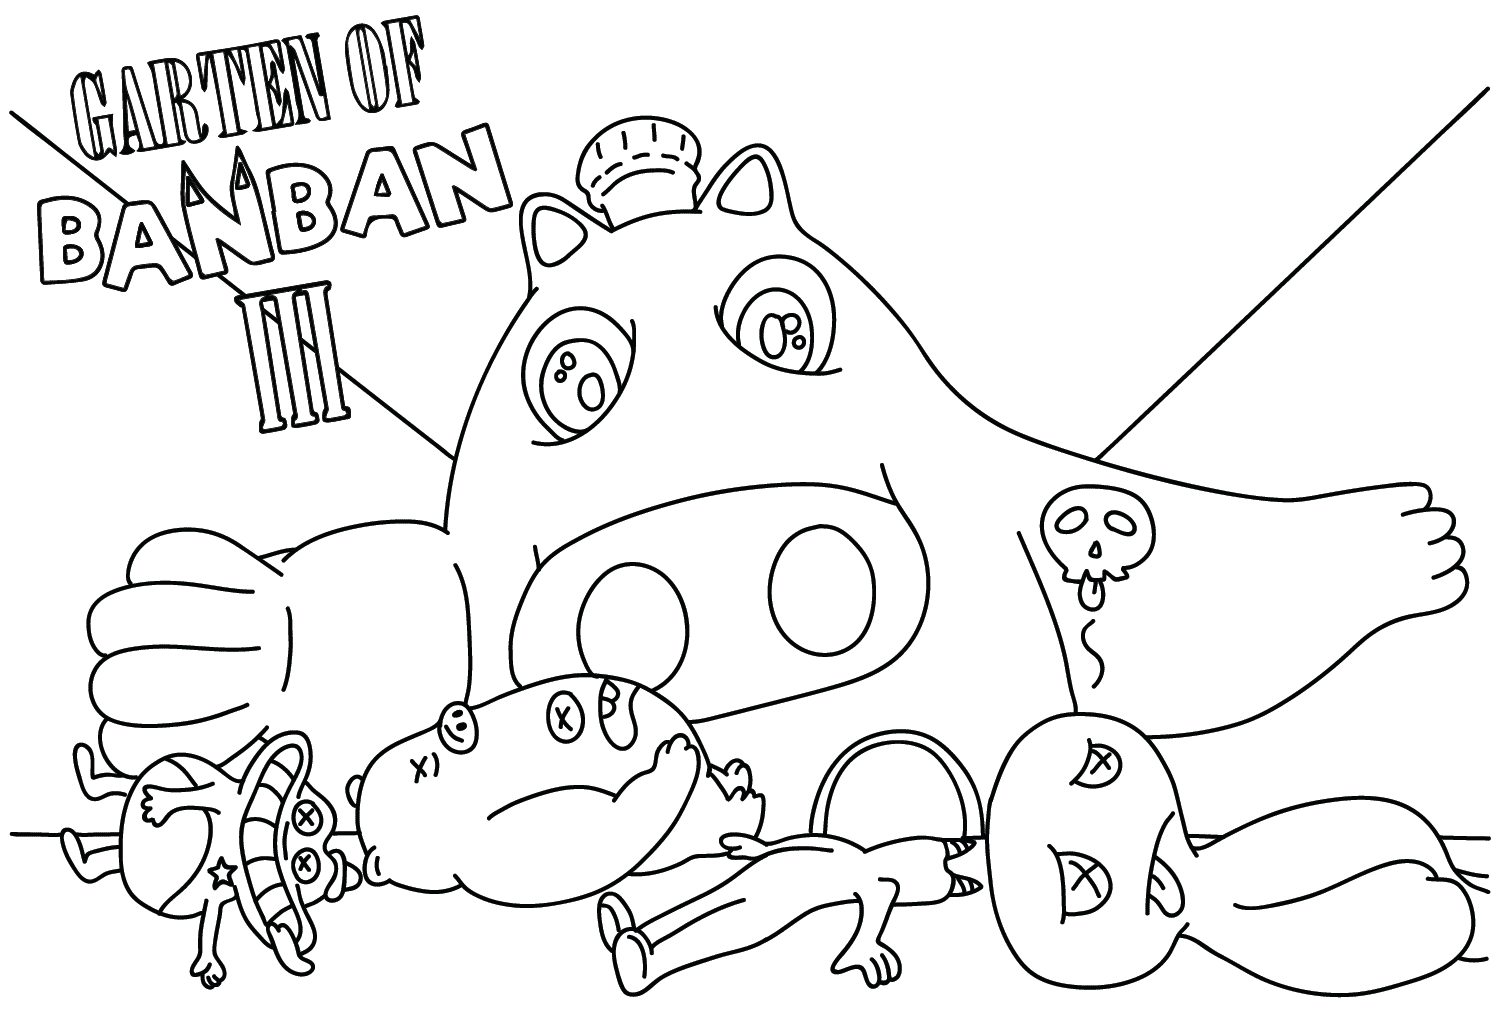 Coloriage de tous les personnages de Garden of Banban 3 de Garden of Banban